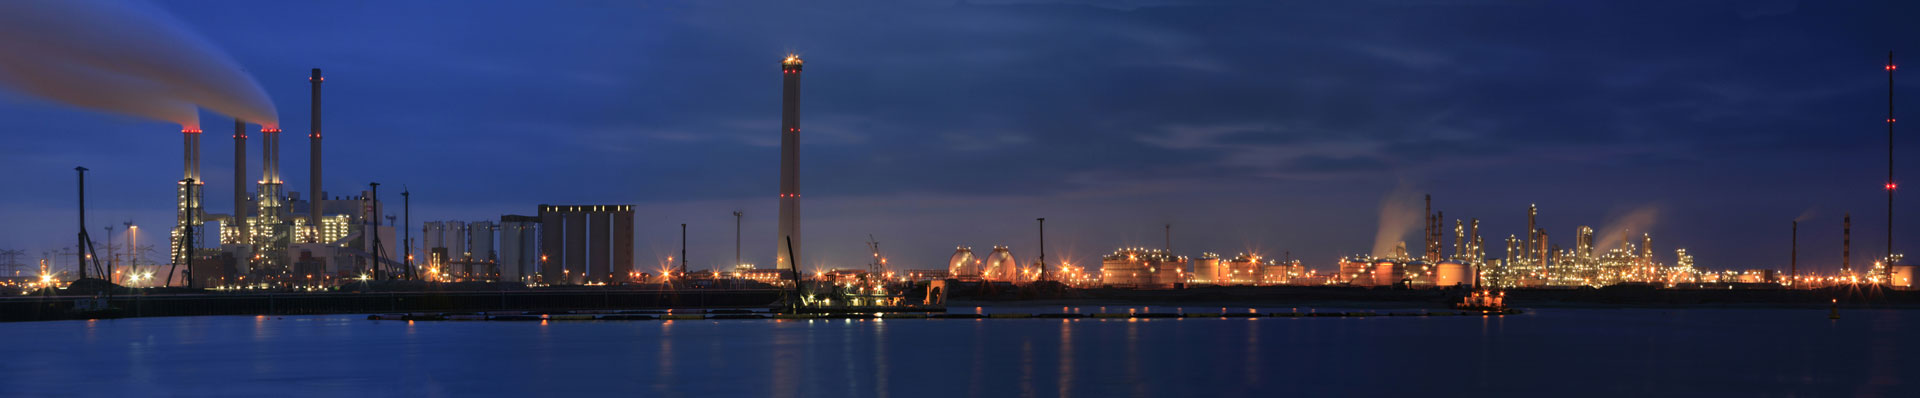 oil refinery skyline at night